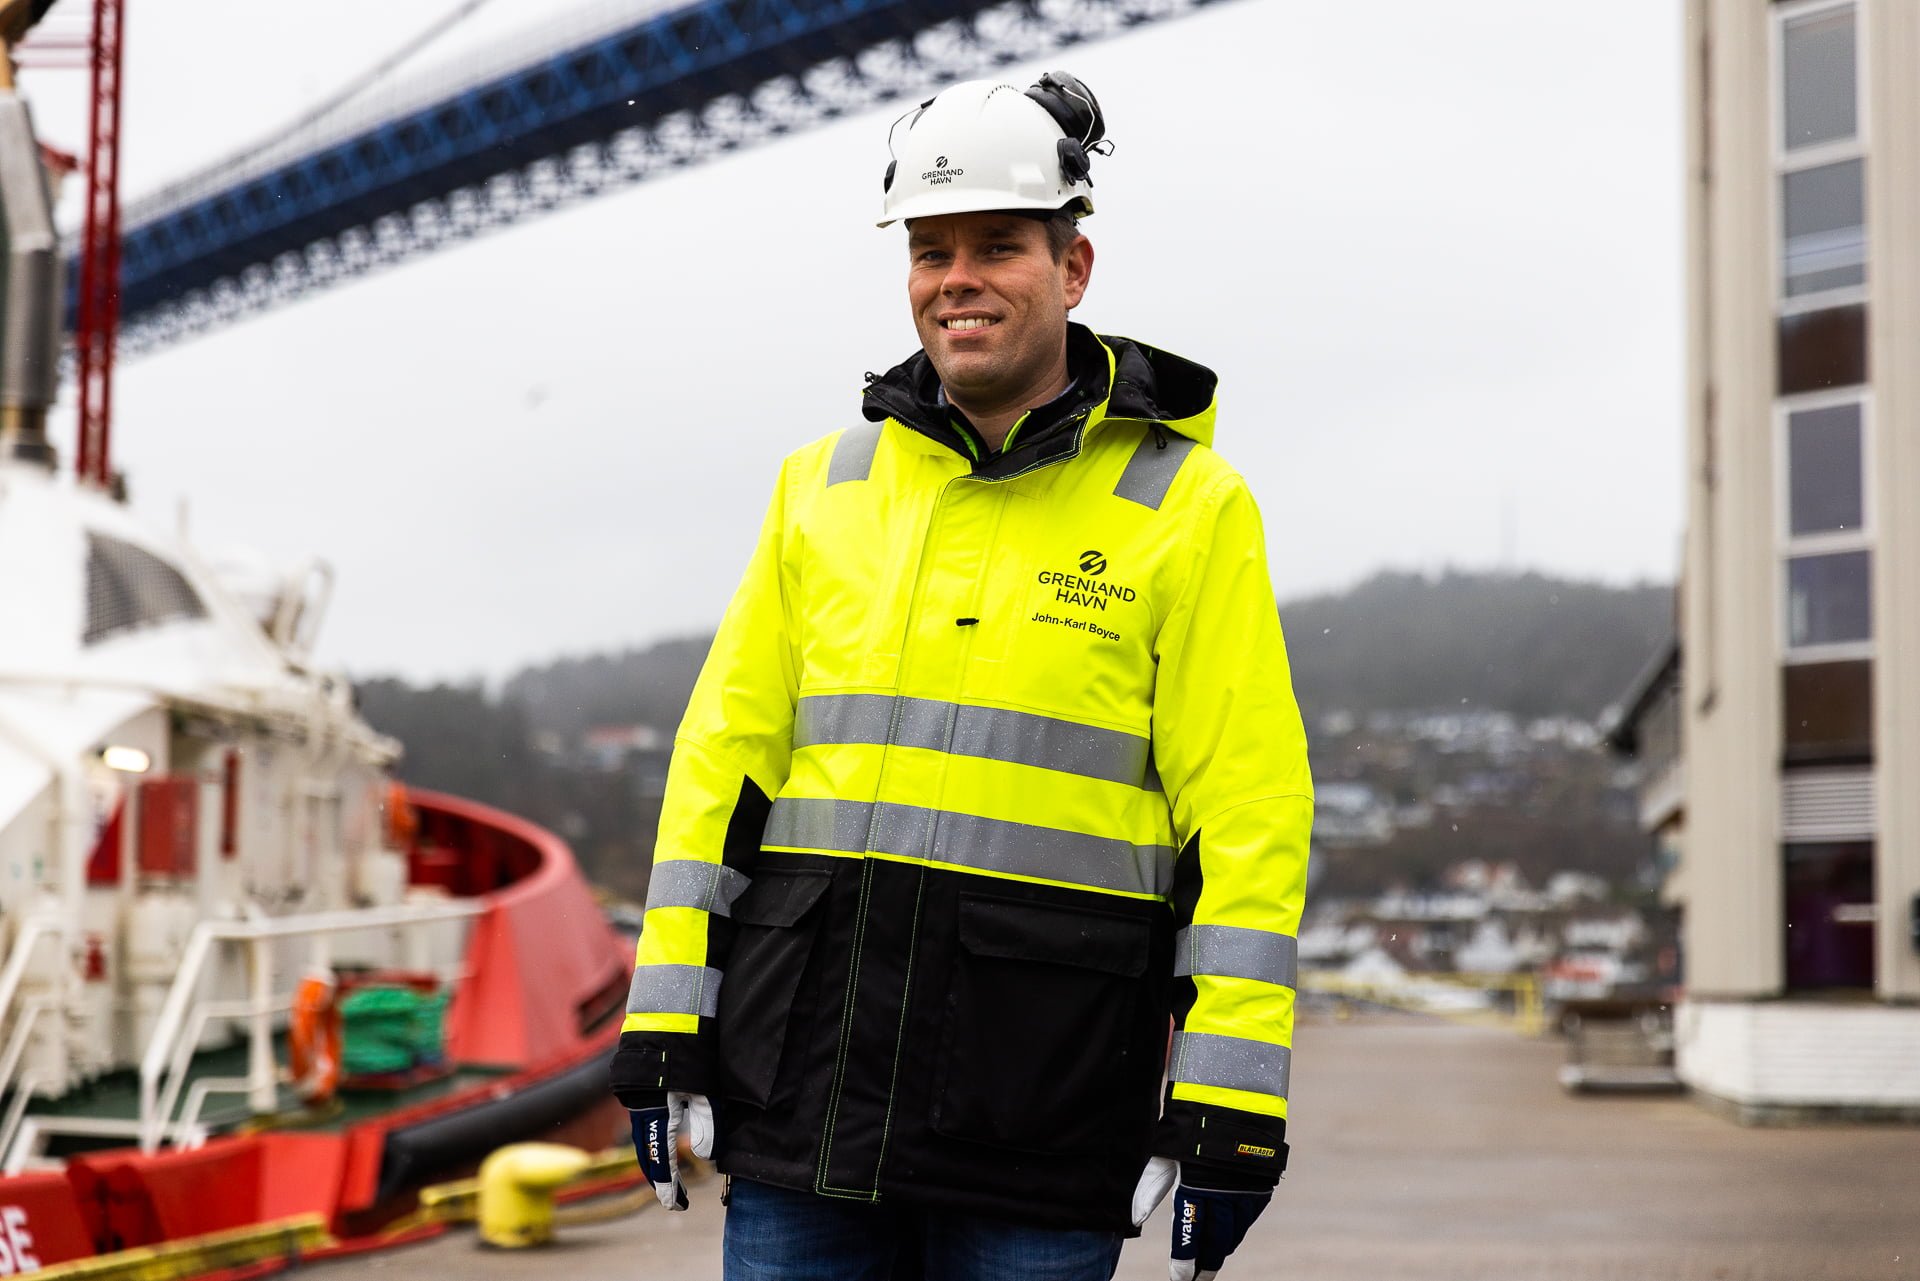 Miljøleder i Grenland Havn John-Karl Boyce står foran tauebåt og med Breviksbrua i bakgrunnen